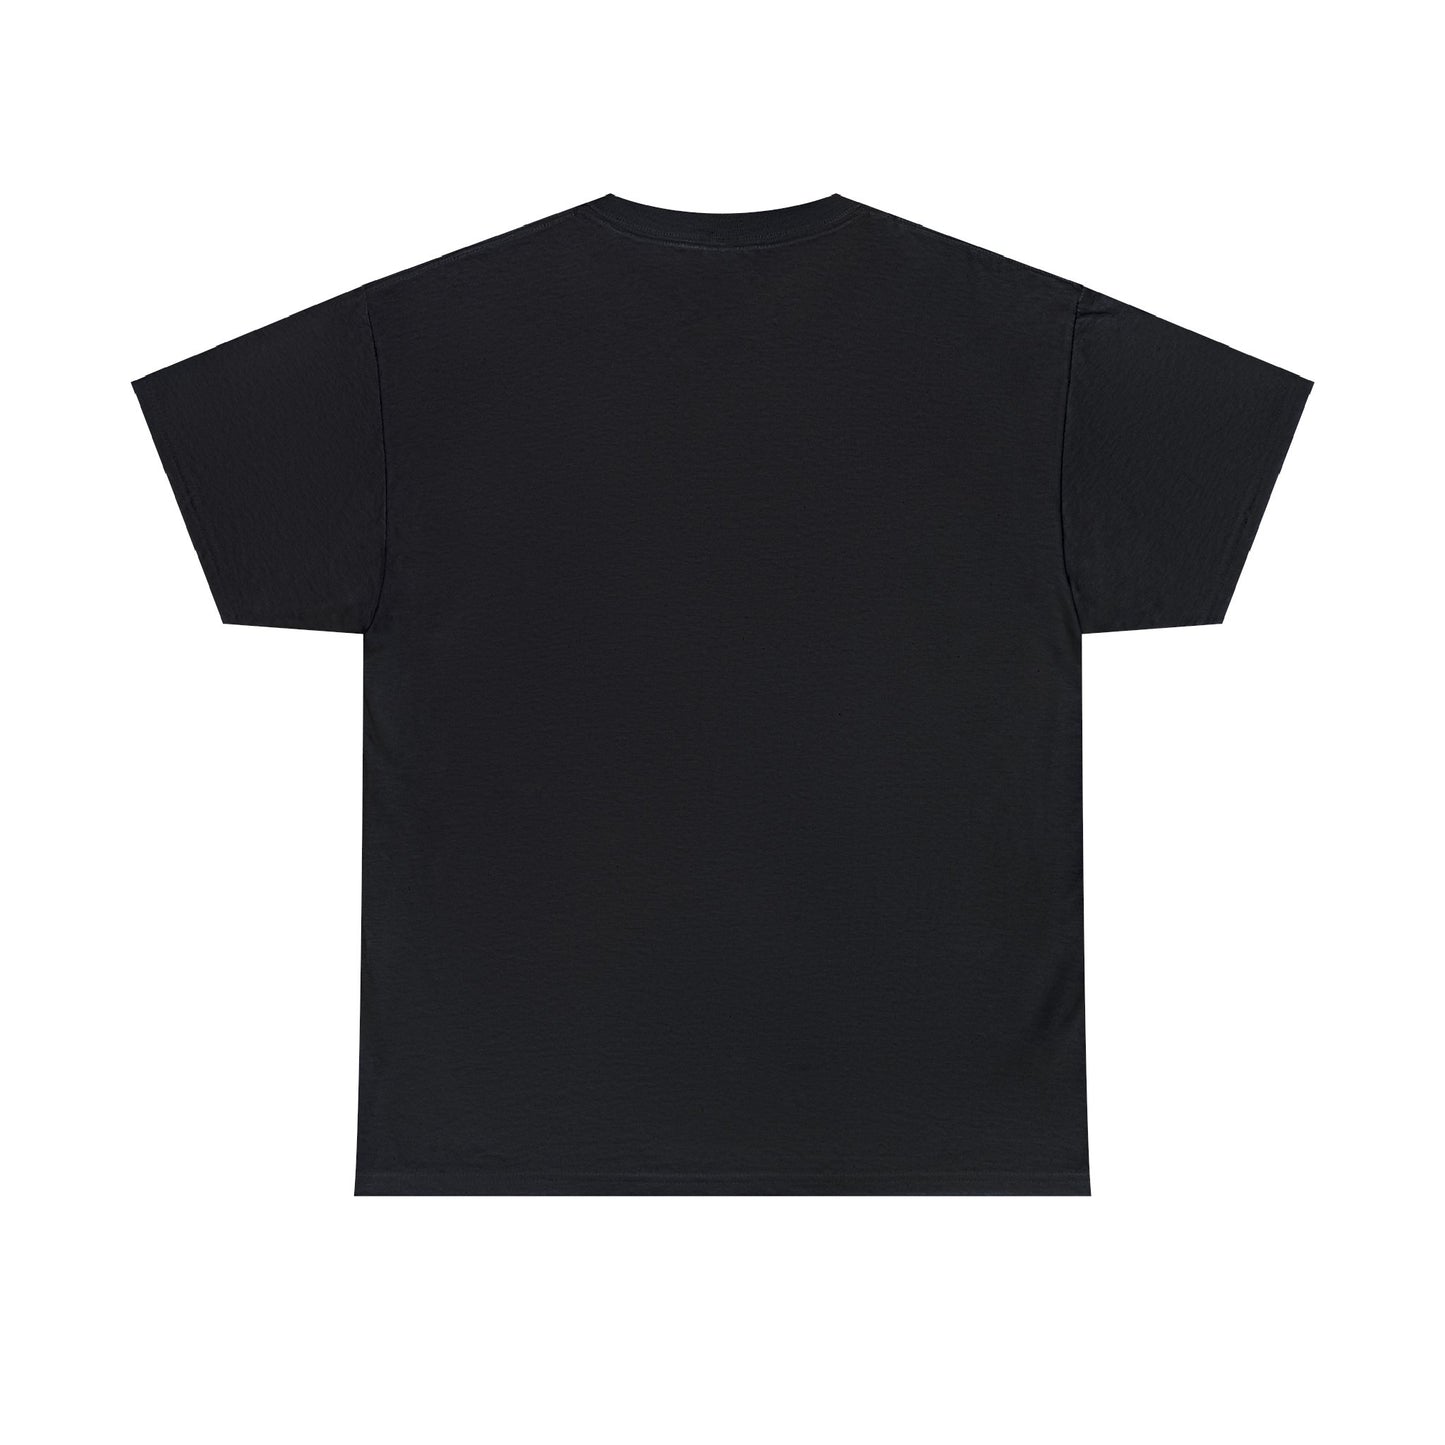 Black Omens T-Shirt, Modern Music Tee